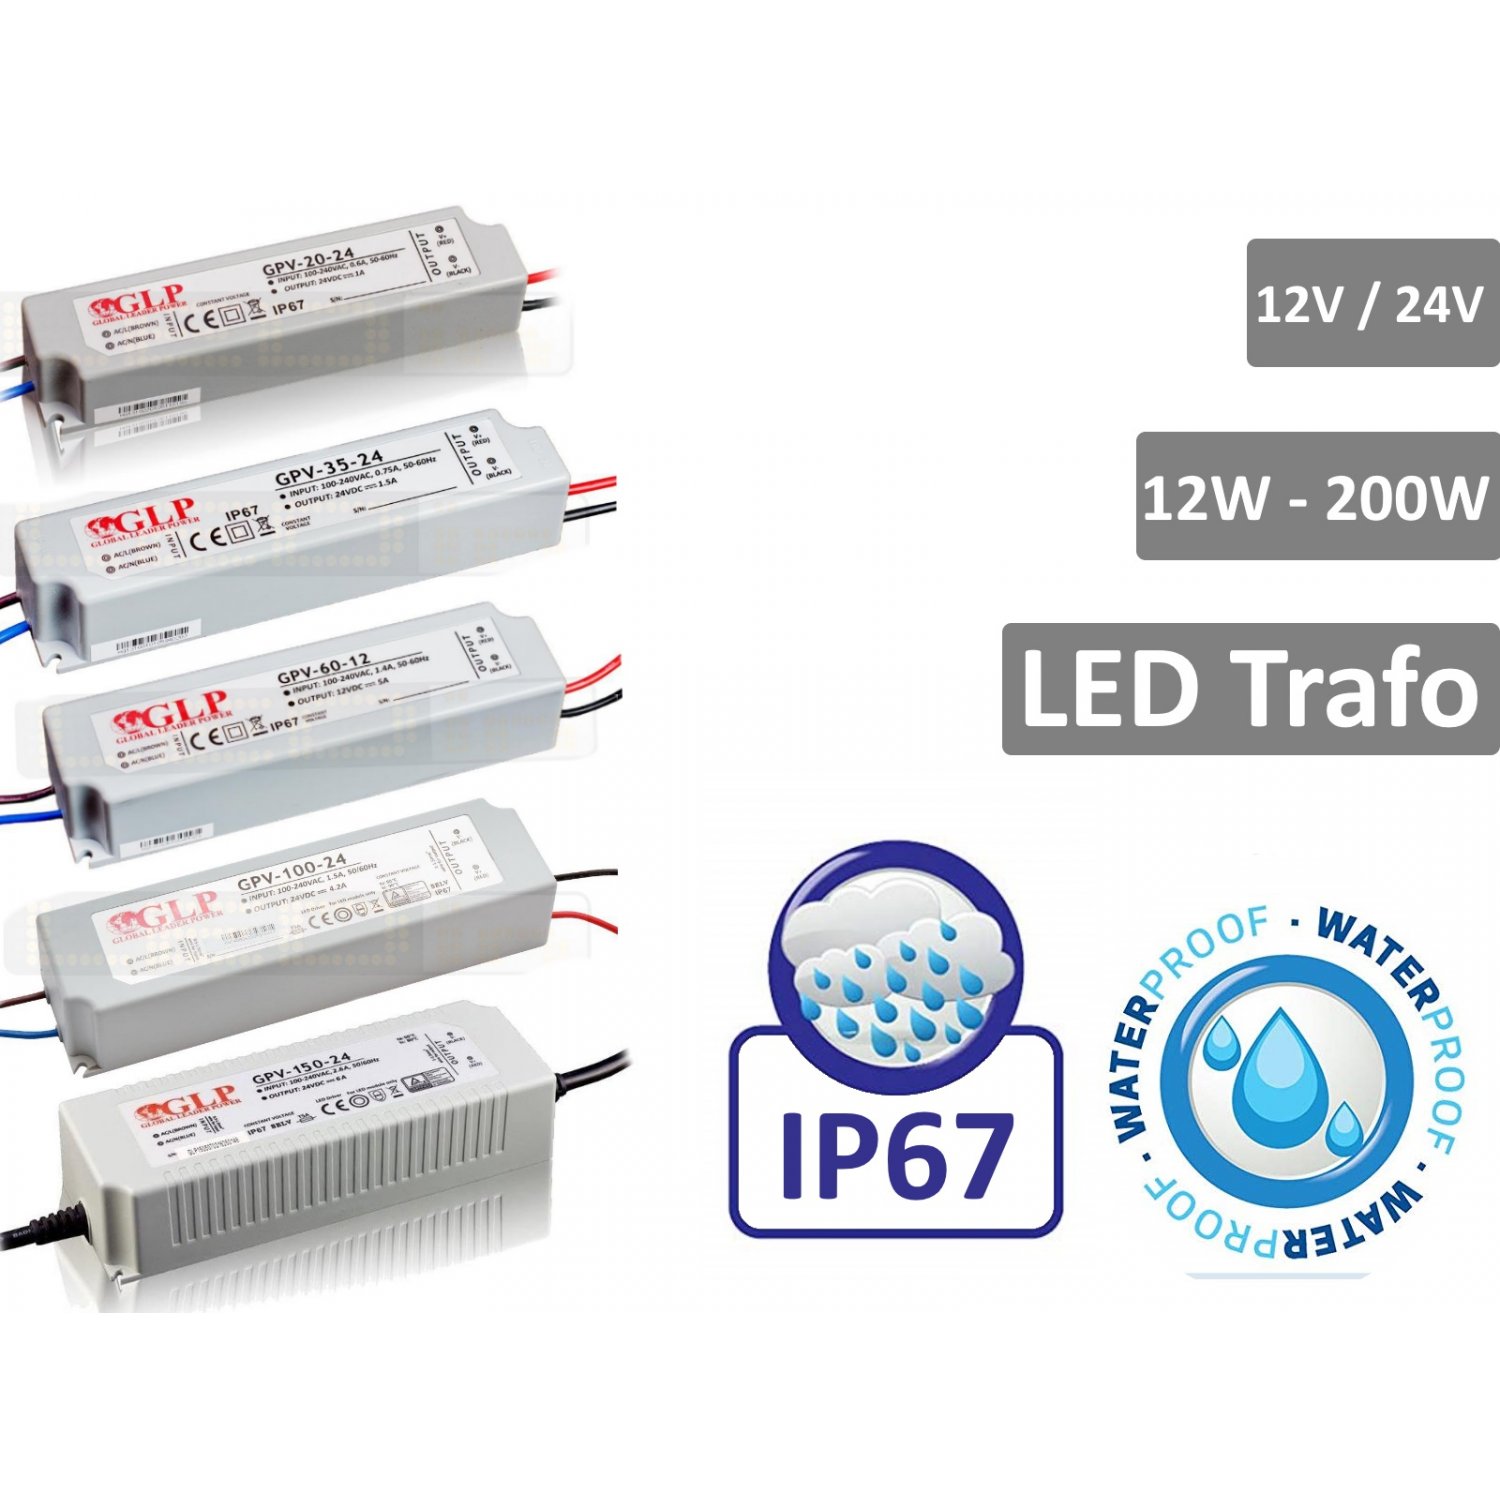 LED line LED Trafo 12W - 200W Netzteil IP67 Wasserdicht Transformator